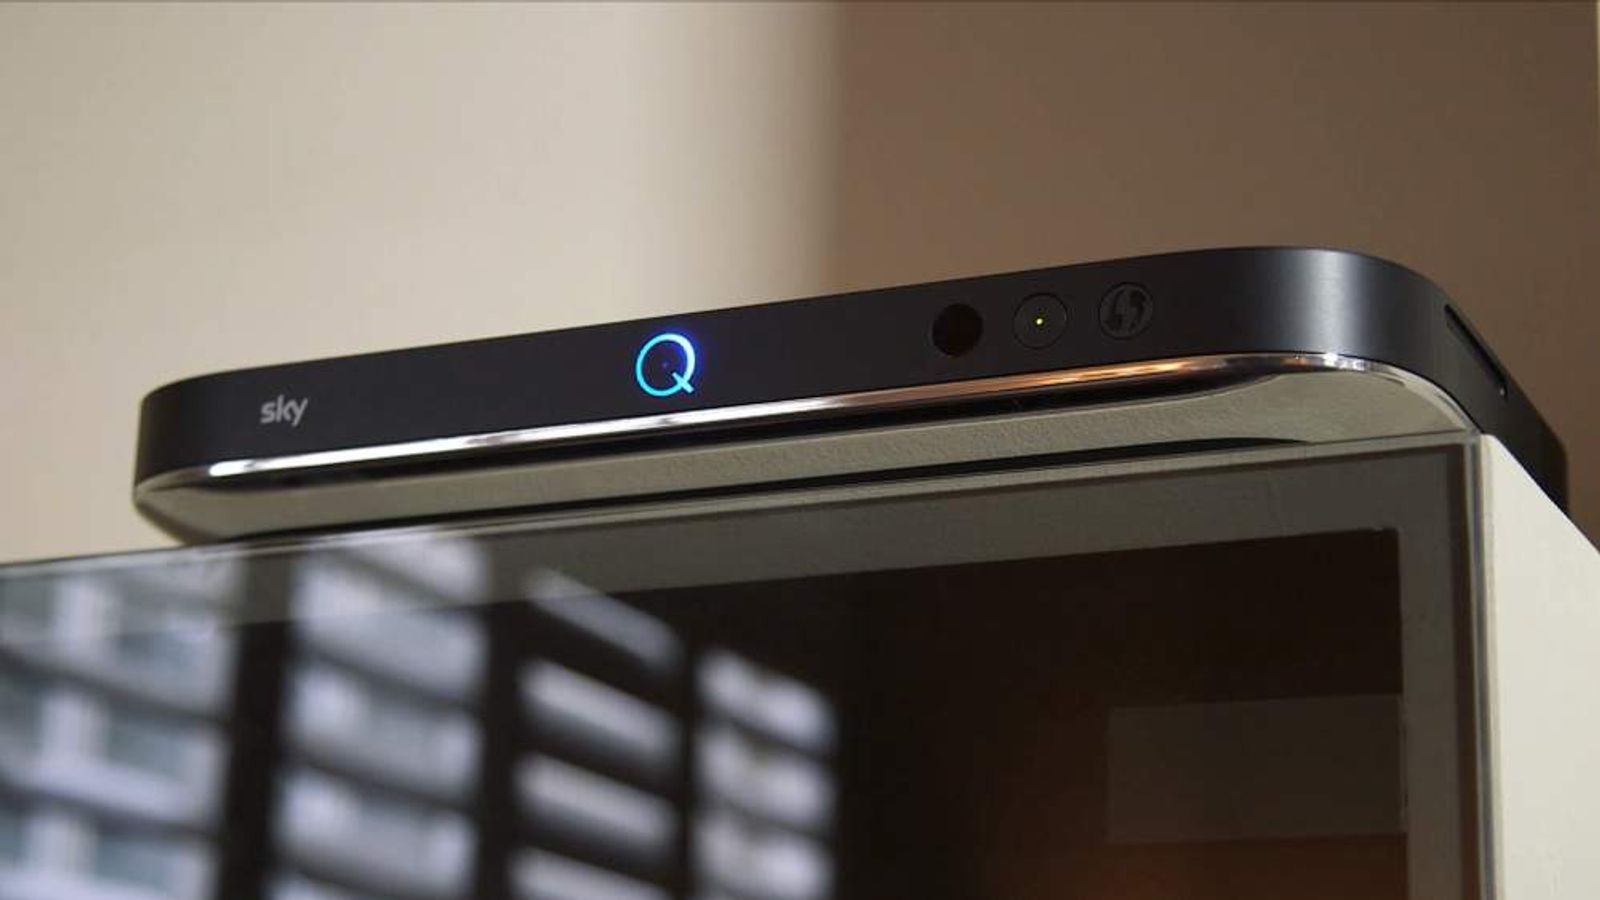 New Sky Q Box Allows 'Fluid TV Viewing' | Science & Tech News | Sky News1600 x 900